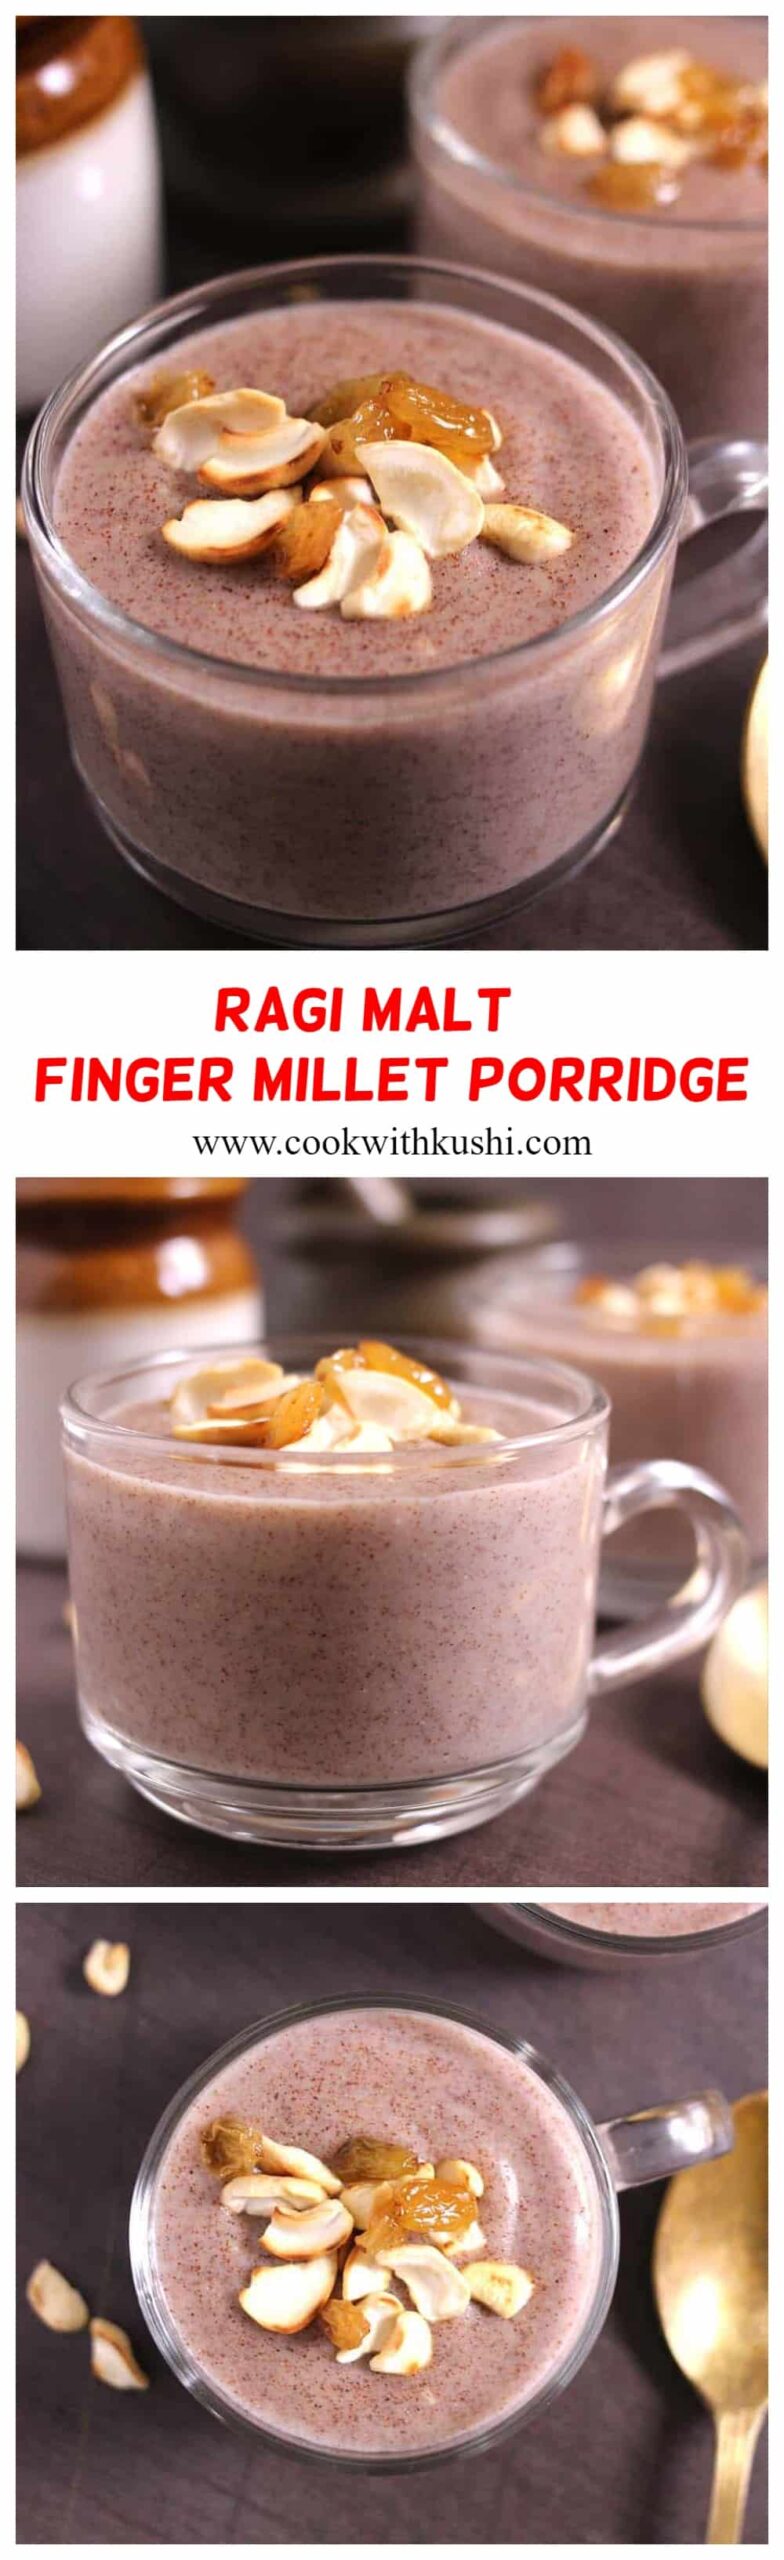 How to make ragi malt, finger millet porridge #healthydrink #Healthyrecipes